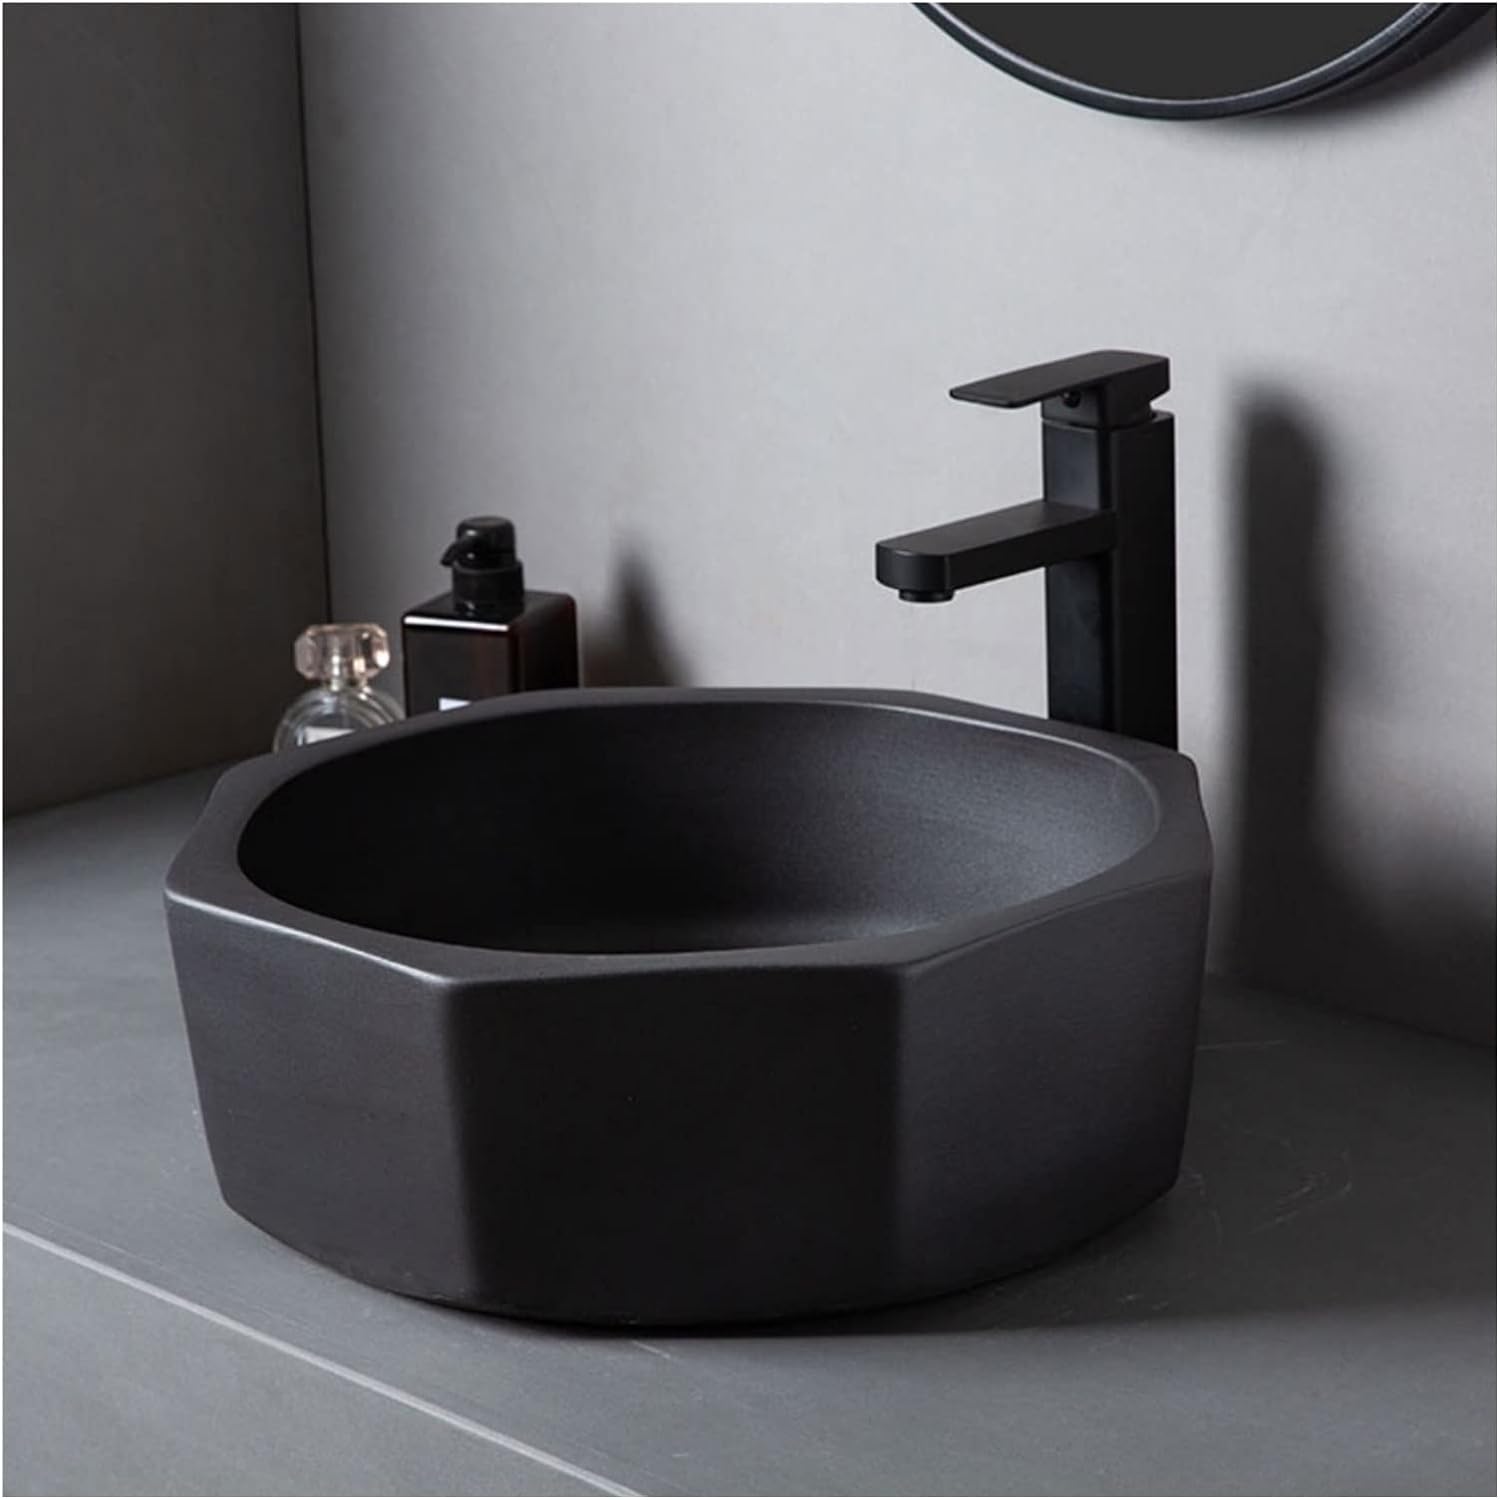 Black Ceramic Vessel Sink, Modern Above Counter Artistic Sink Bowl, Bathroom Porcelain Art Wash Basin with Faucet Pop-Up Drain